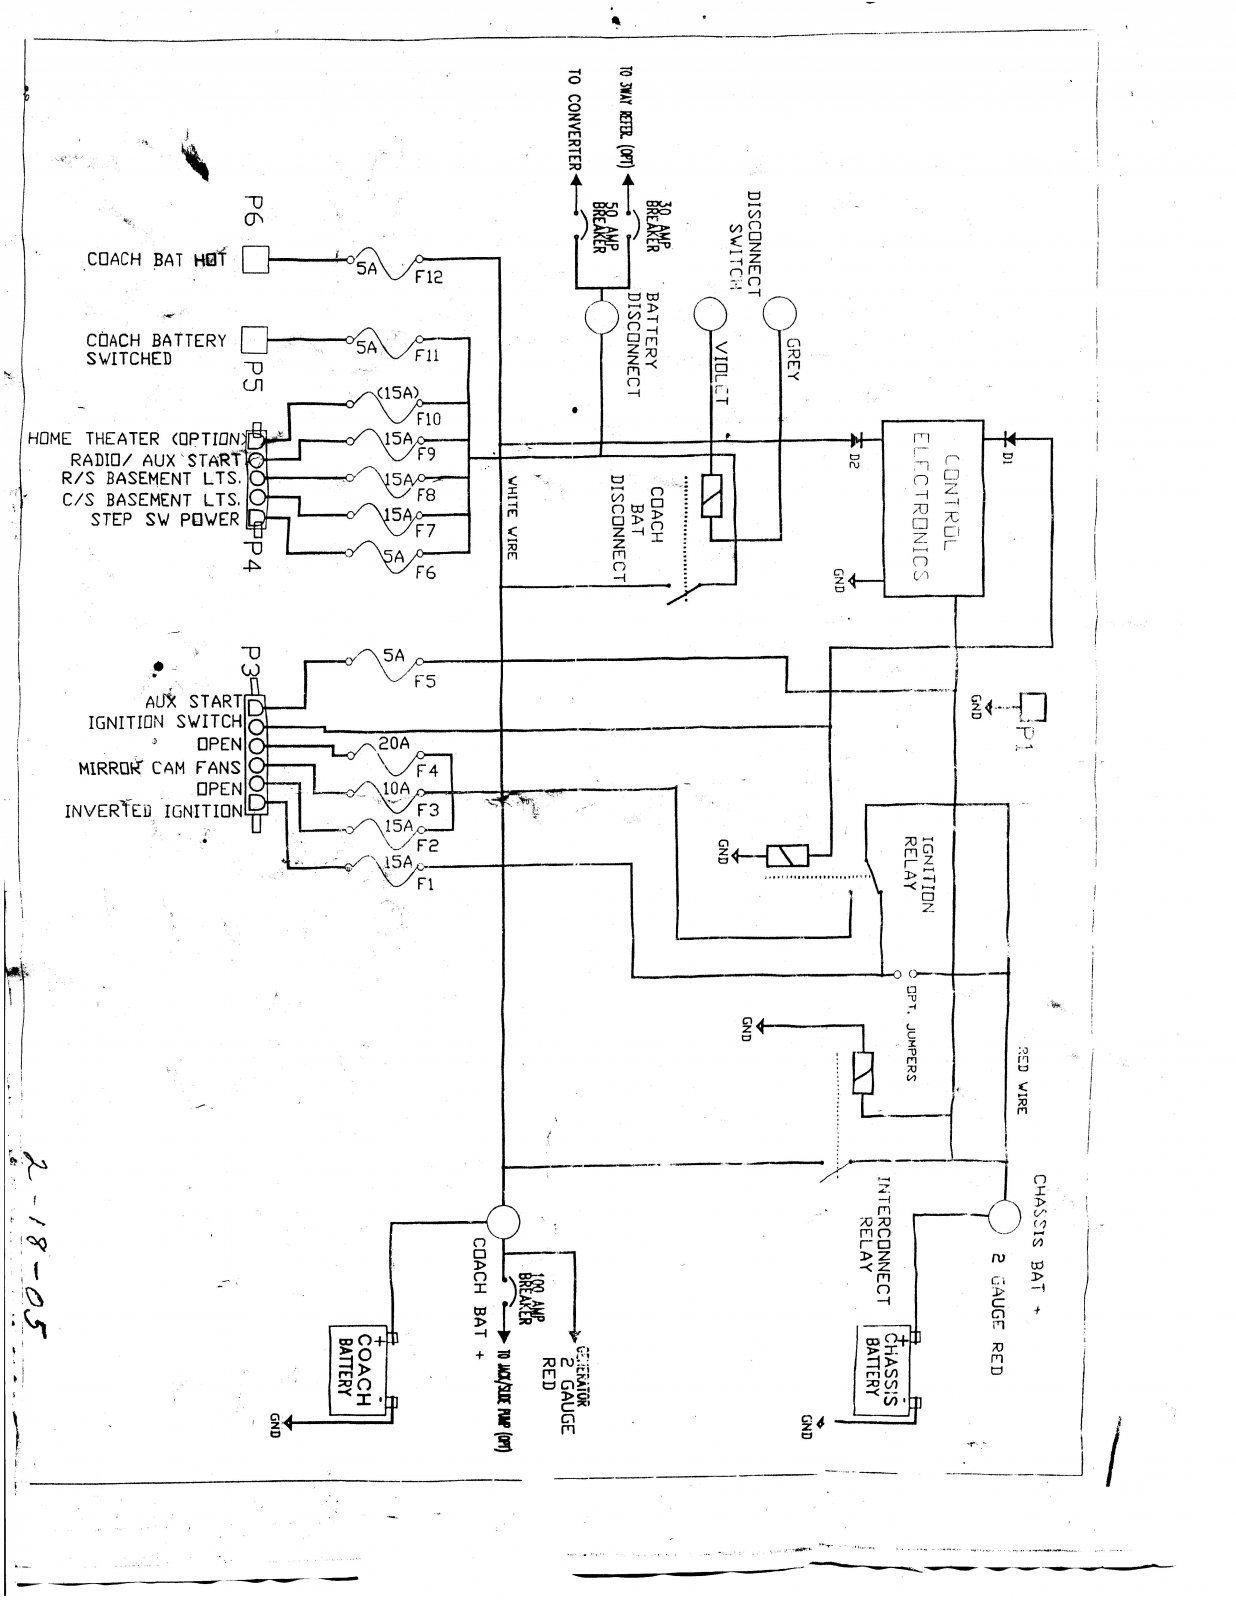 jayco swan wiring diagram